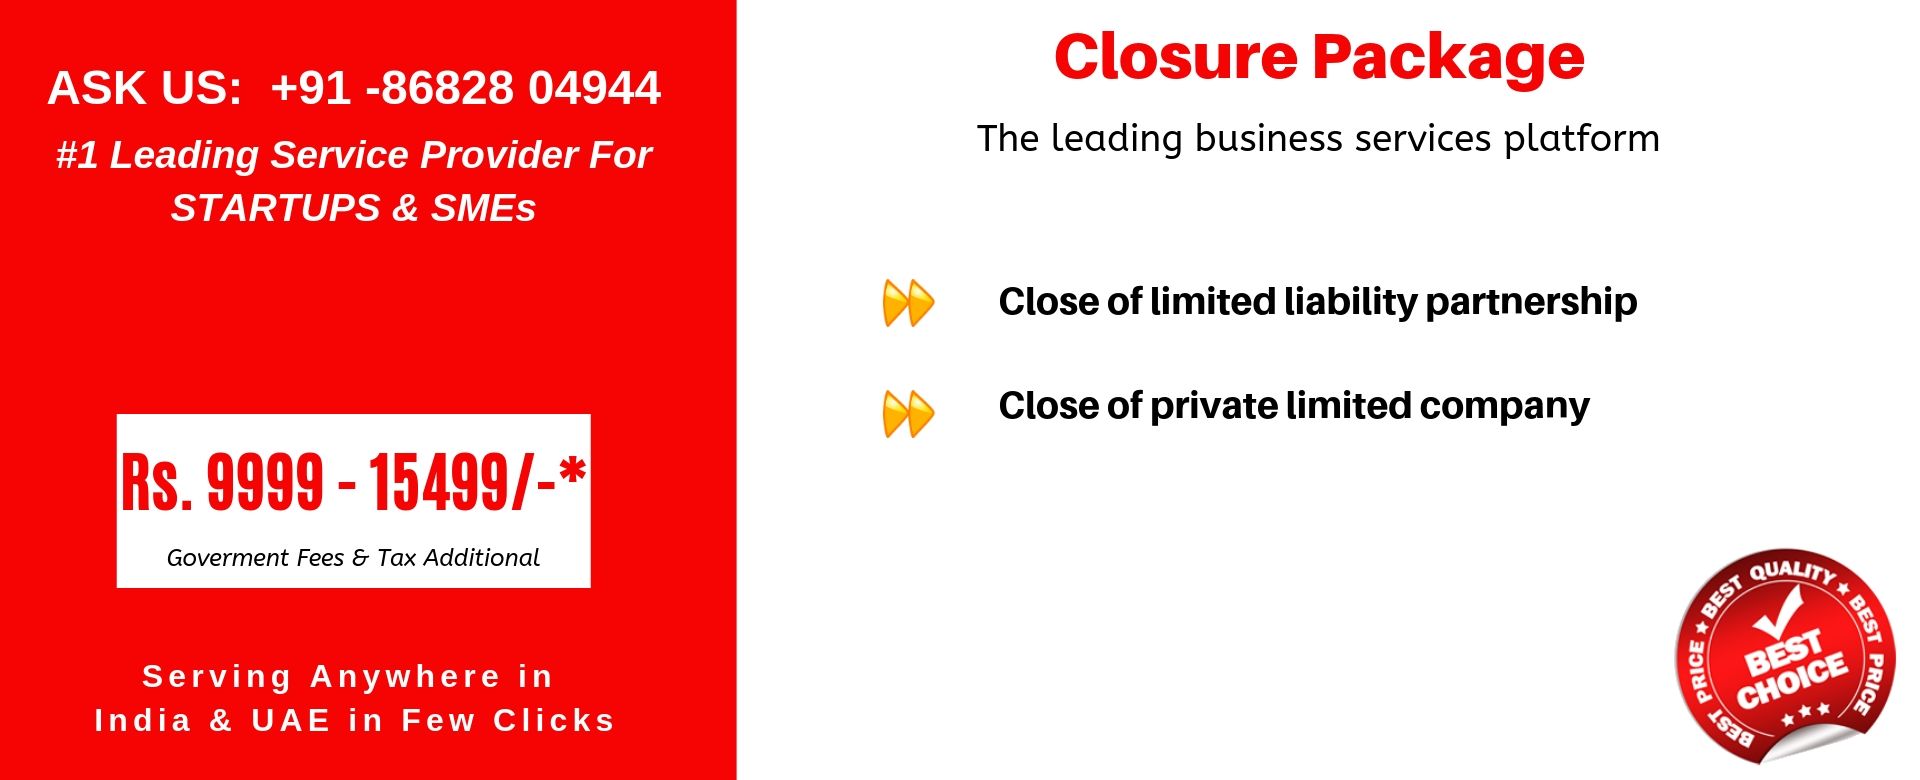 closure package india